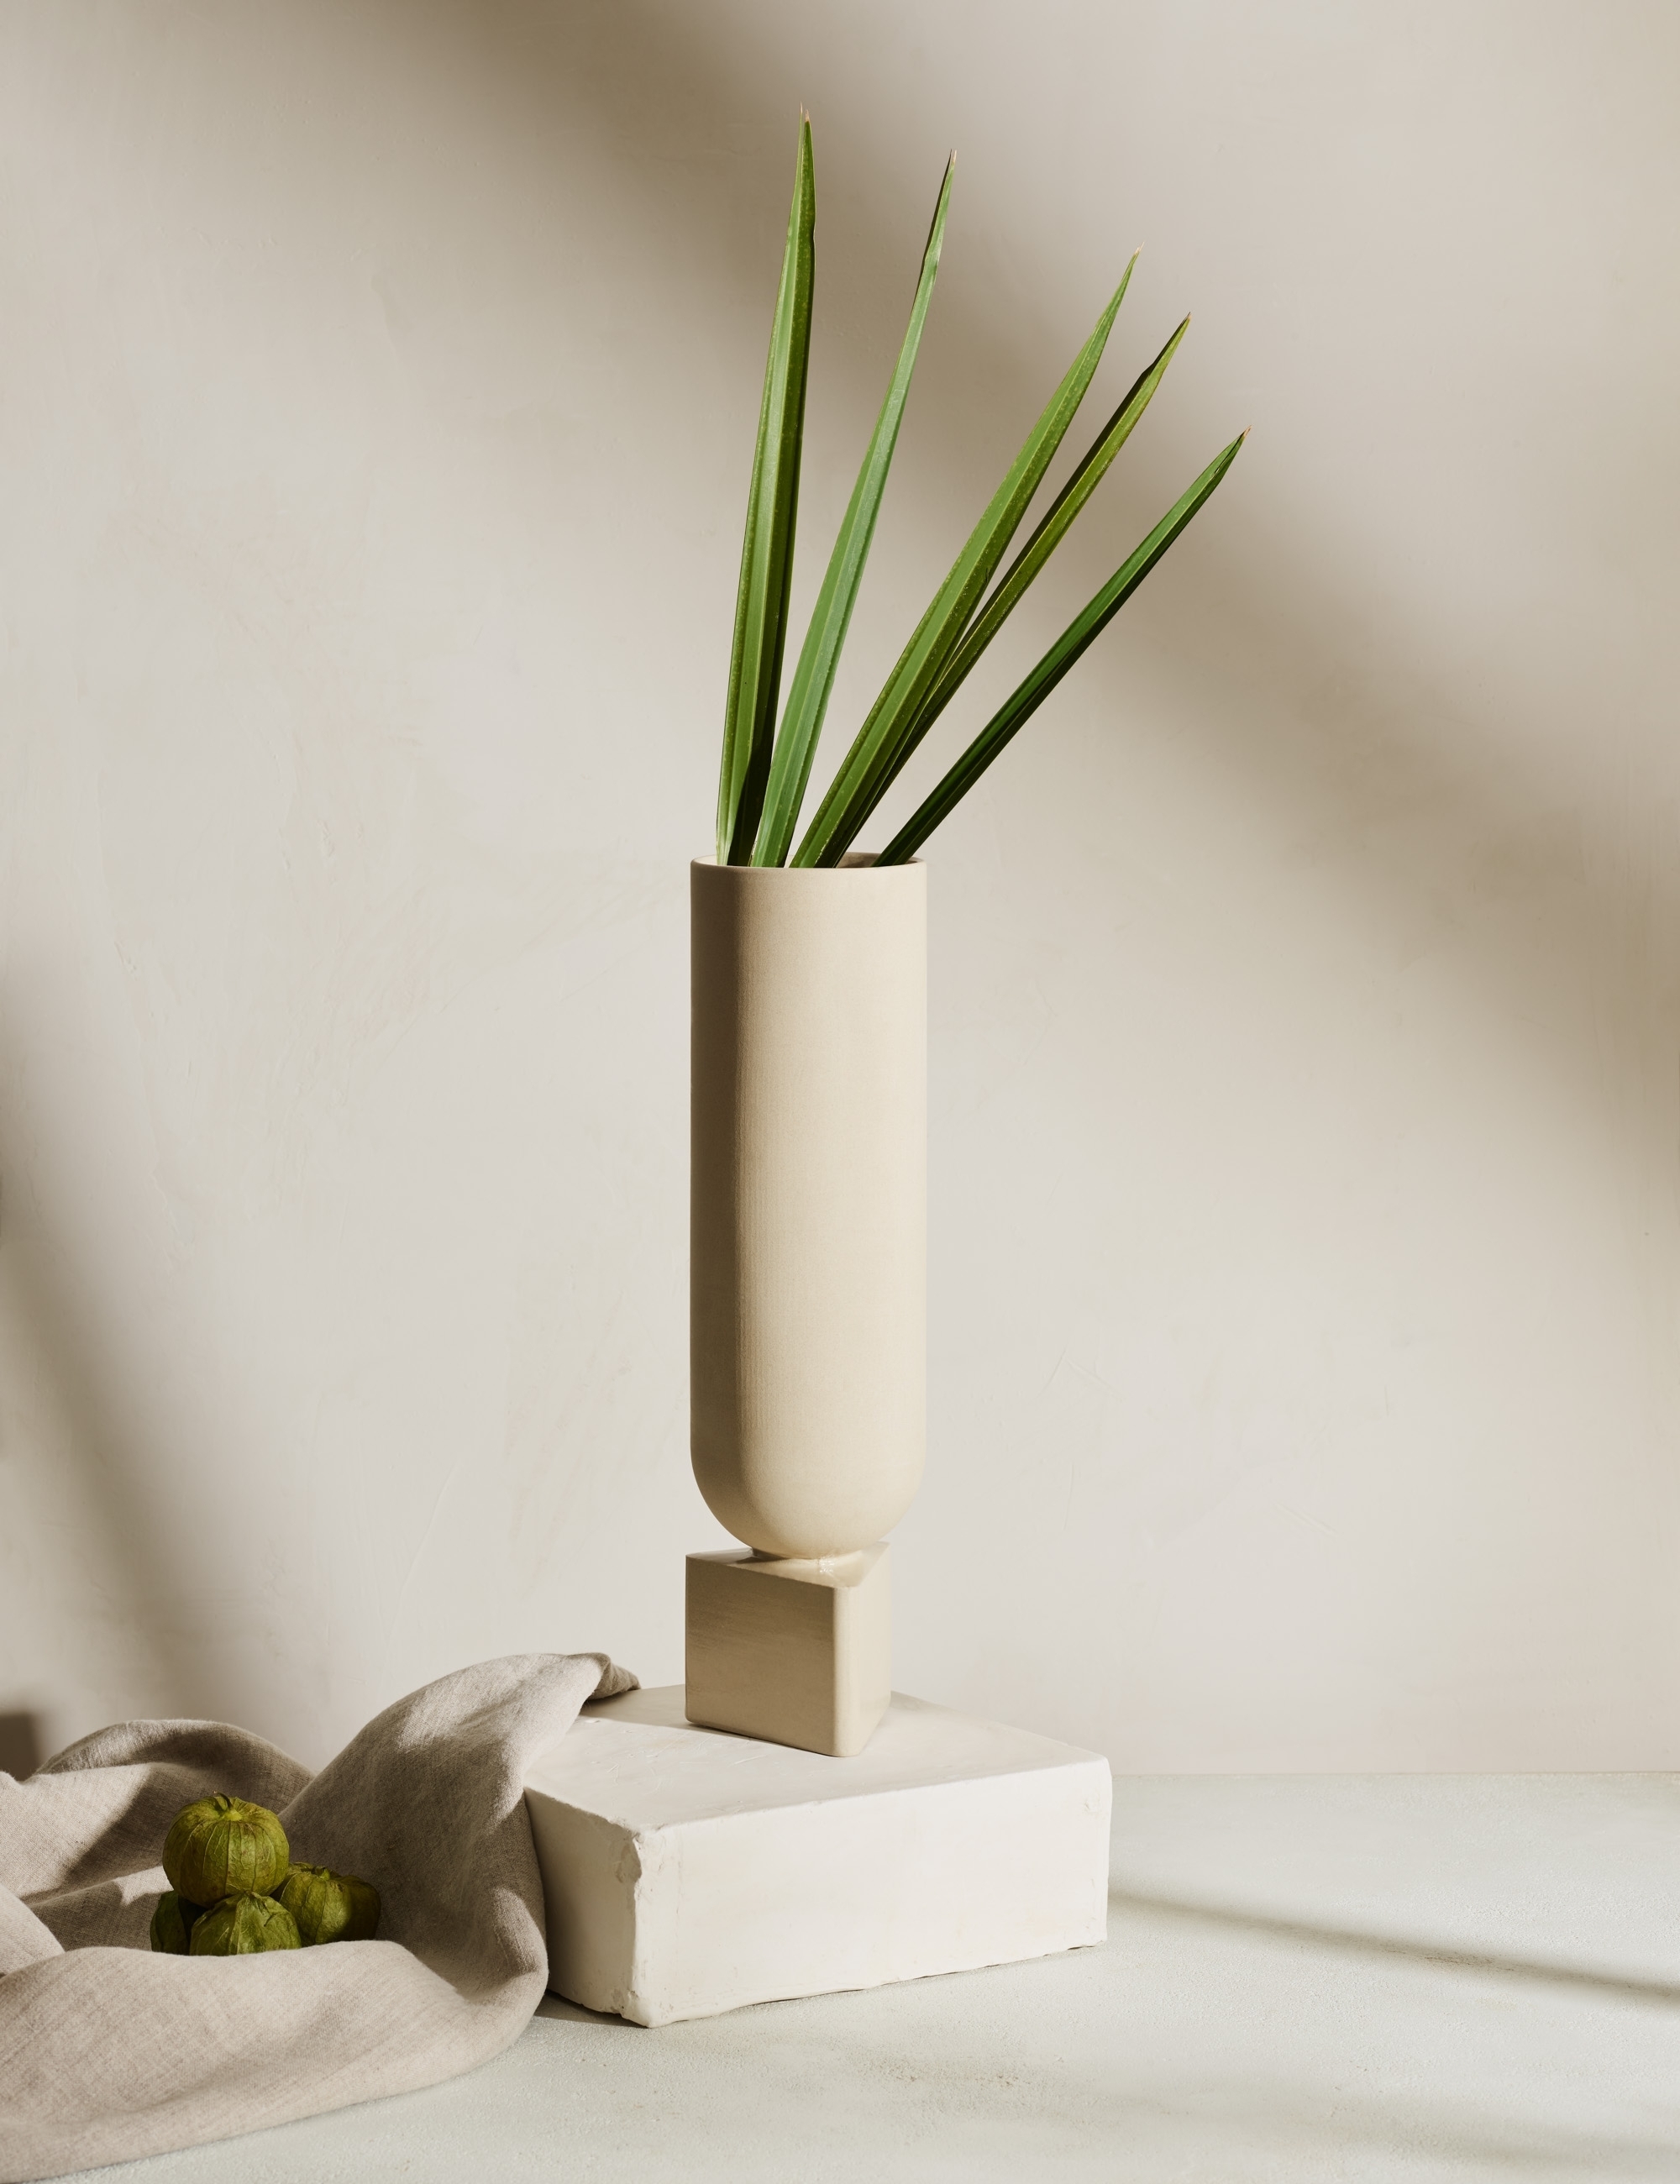 Tava Decorative Vase by Light + Ladder - Image 0